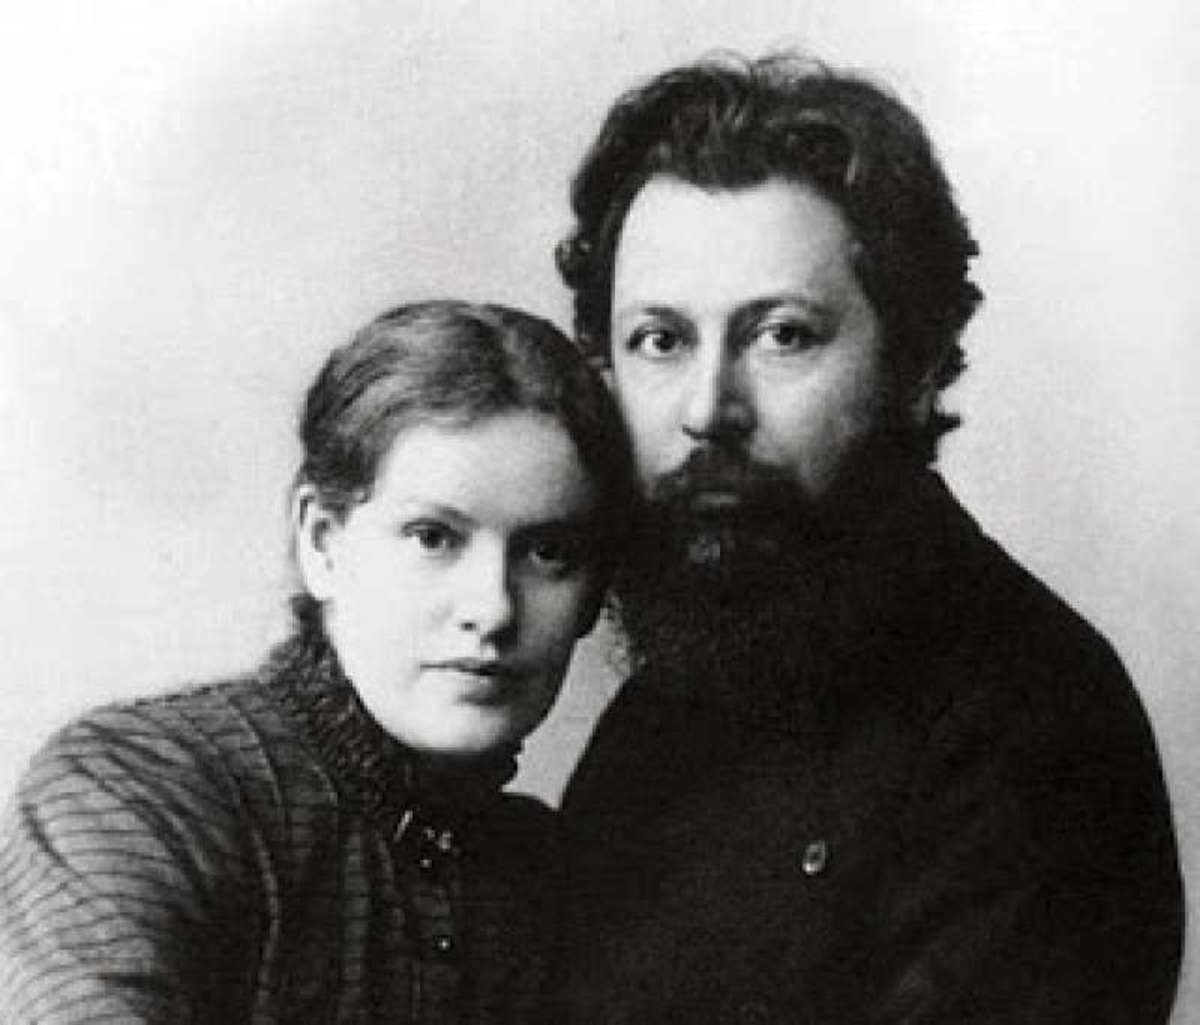 Did Nietzsche fall in love?